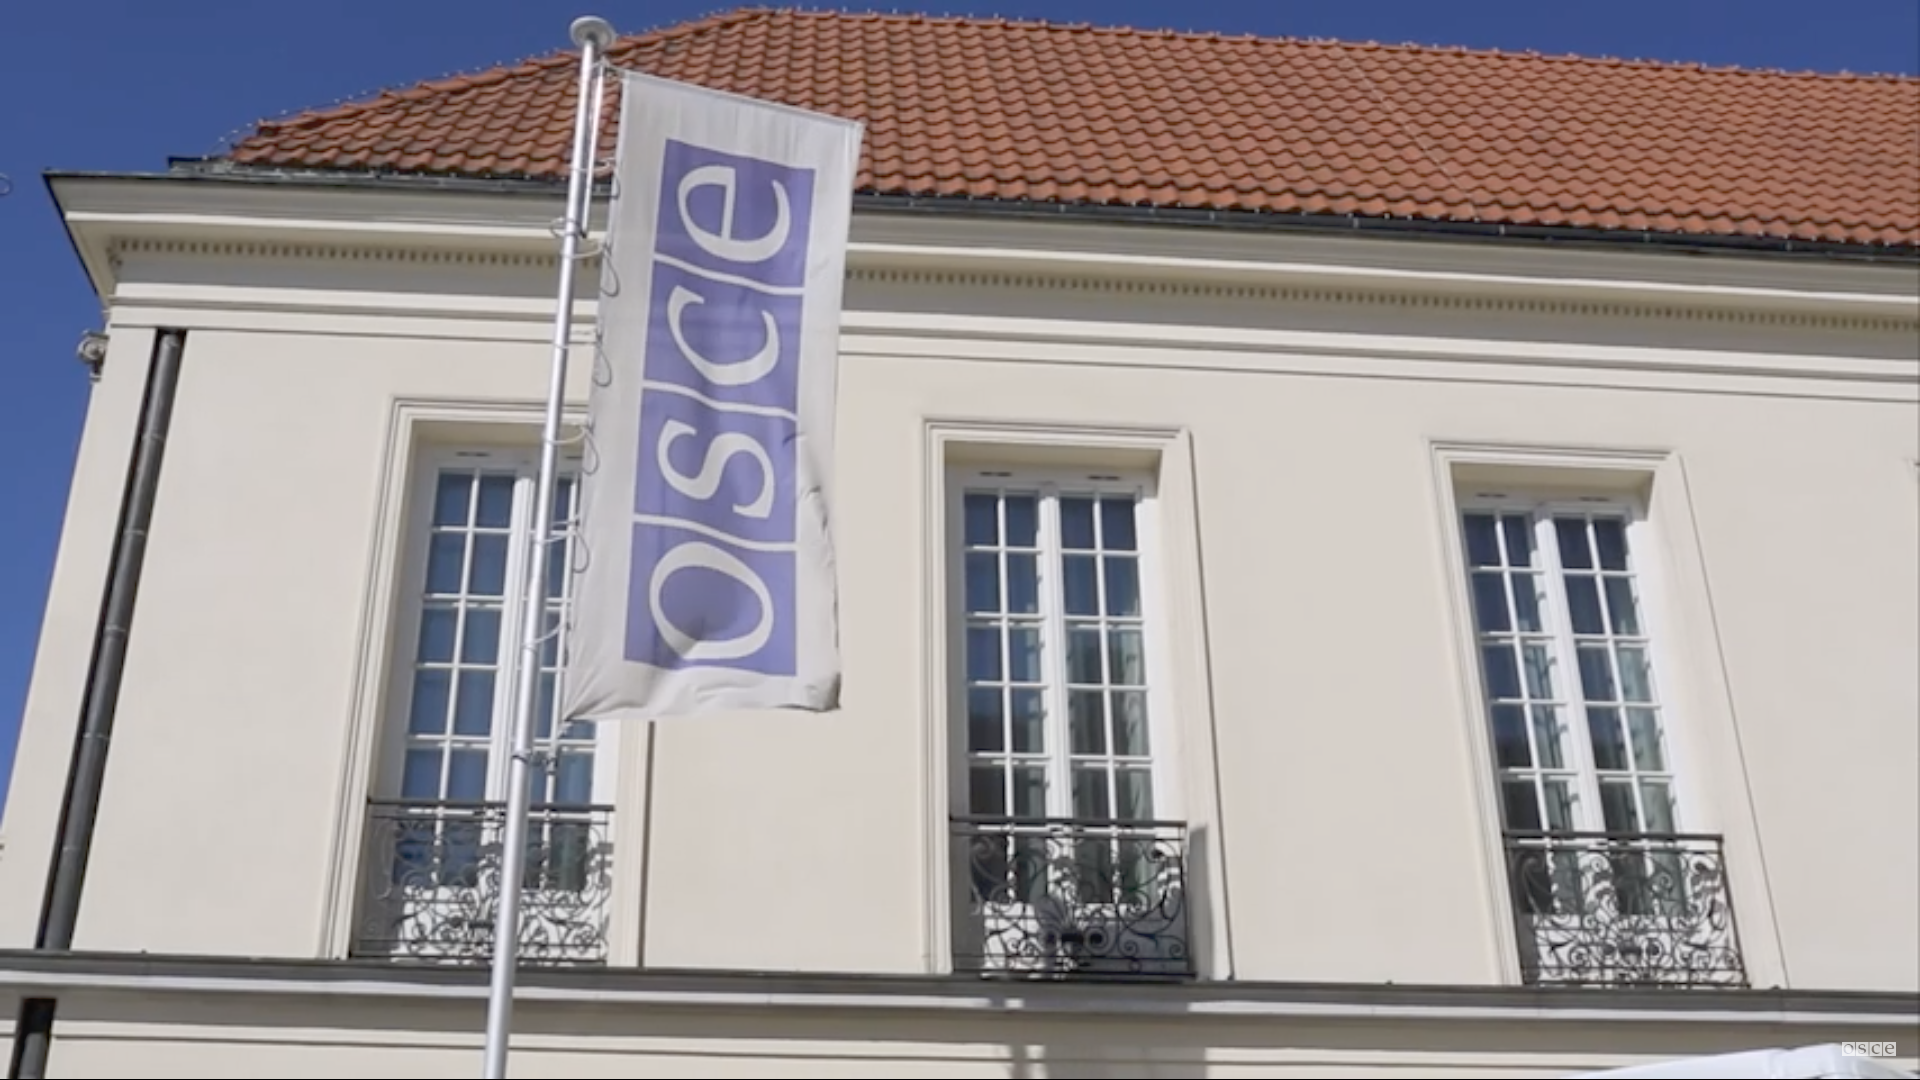 OSCE 2019, capture @ OSCE